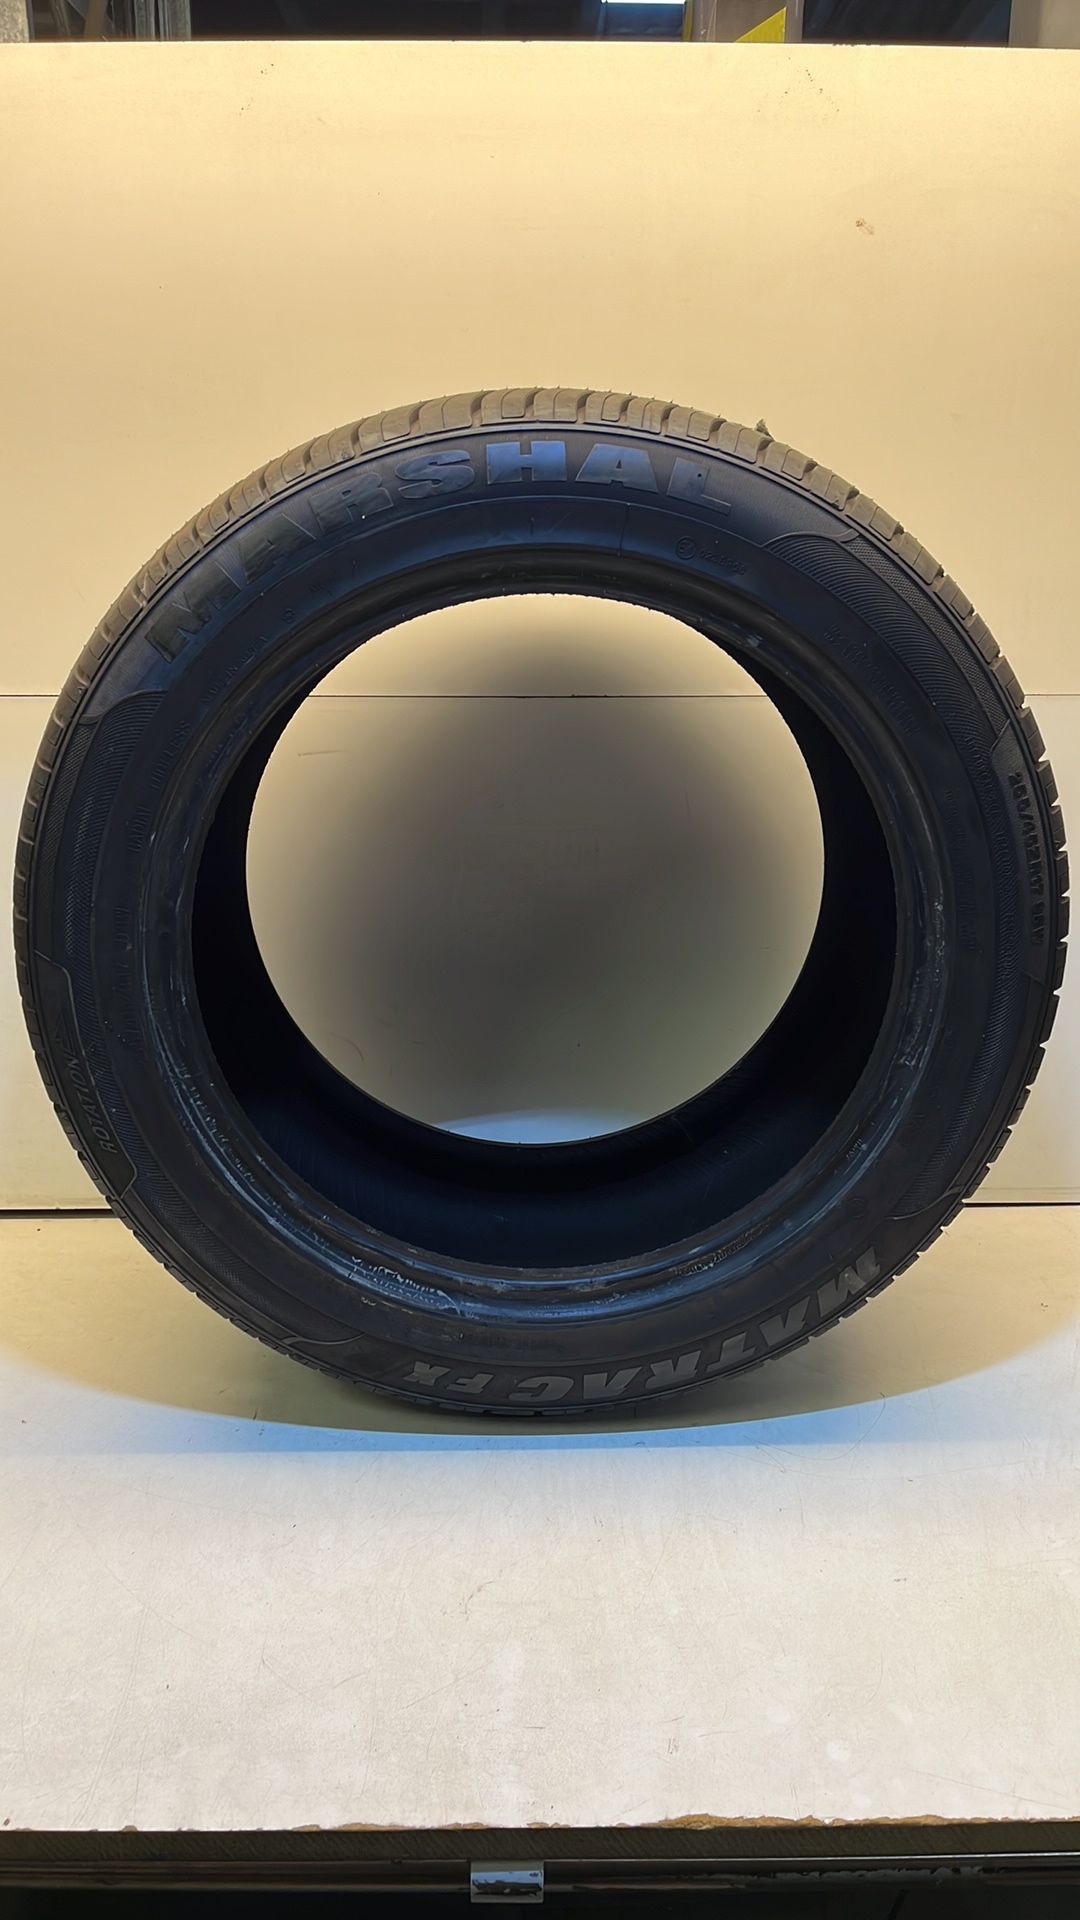 Marshall | Matrac Fc | 255/45 ZR17 Tyre - Image 4 of 5